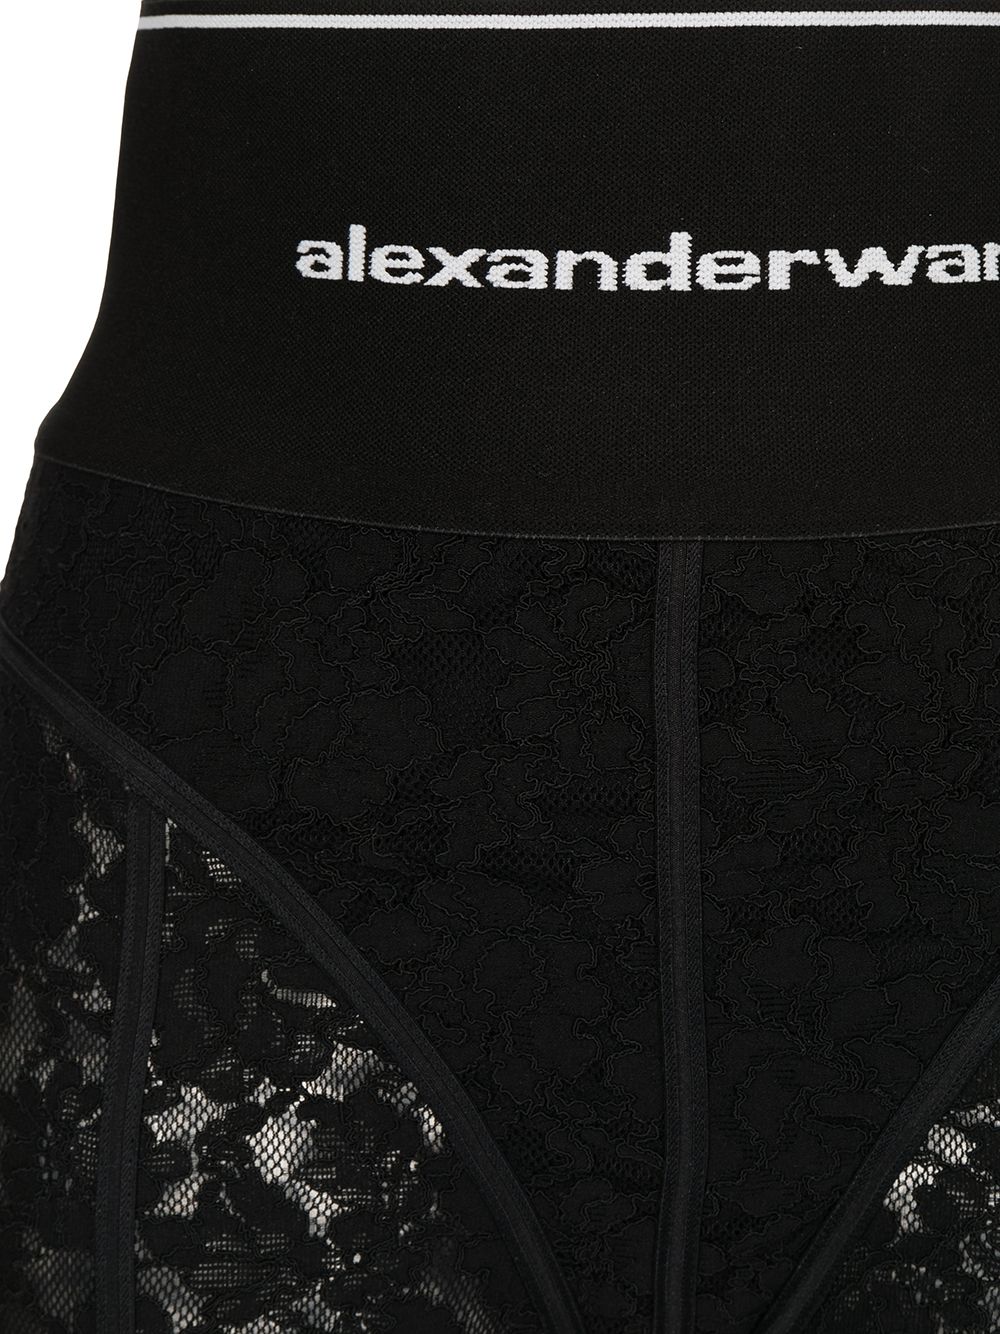 Alexander Wang Logo Elastic Lace LEGGING in Black